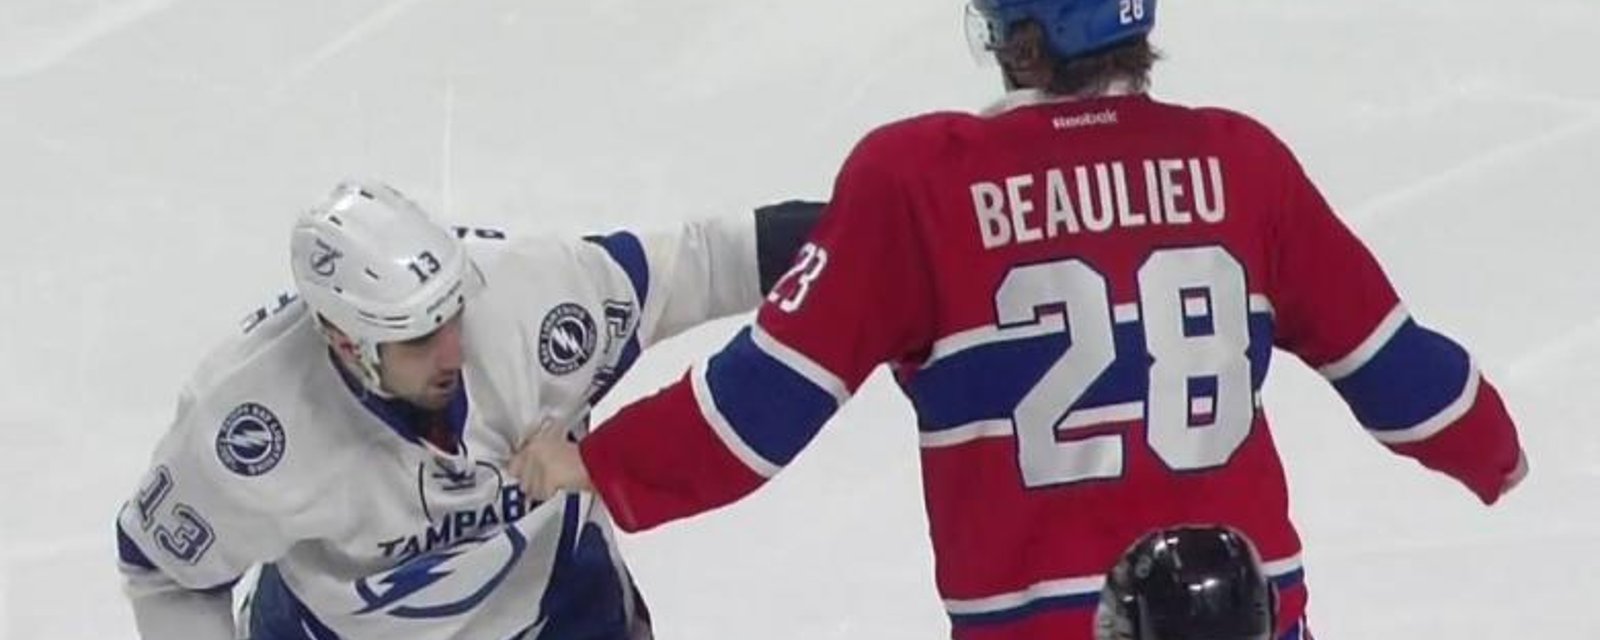 Beaulieu destroys Paquette's visor with a huge punch!